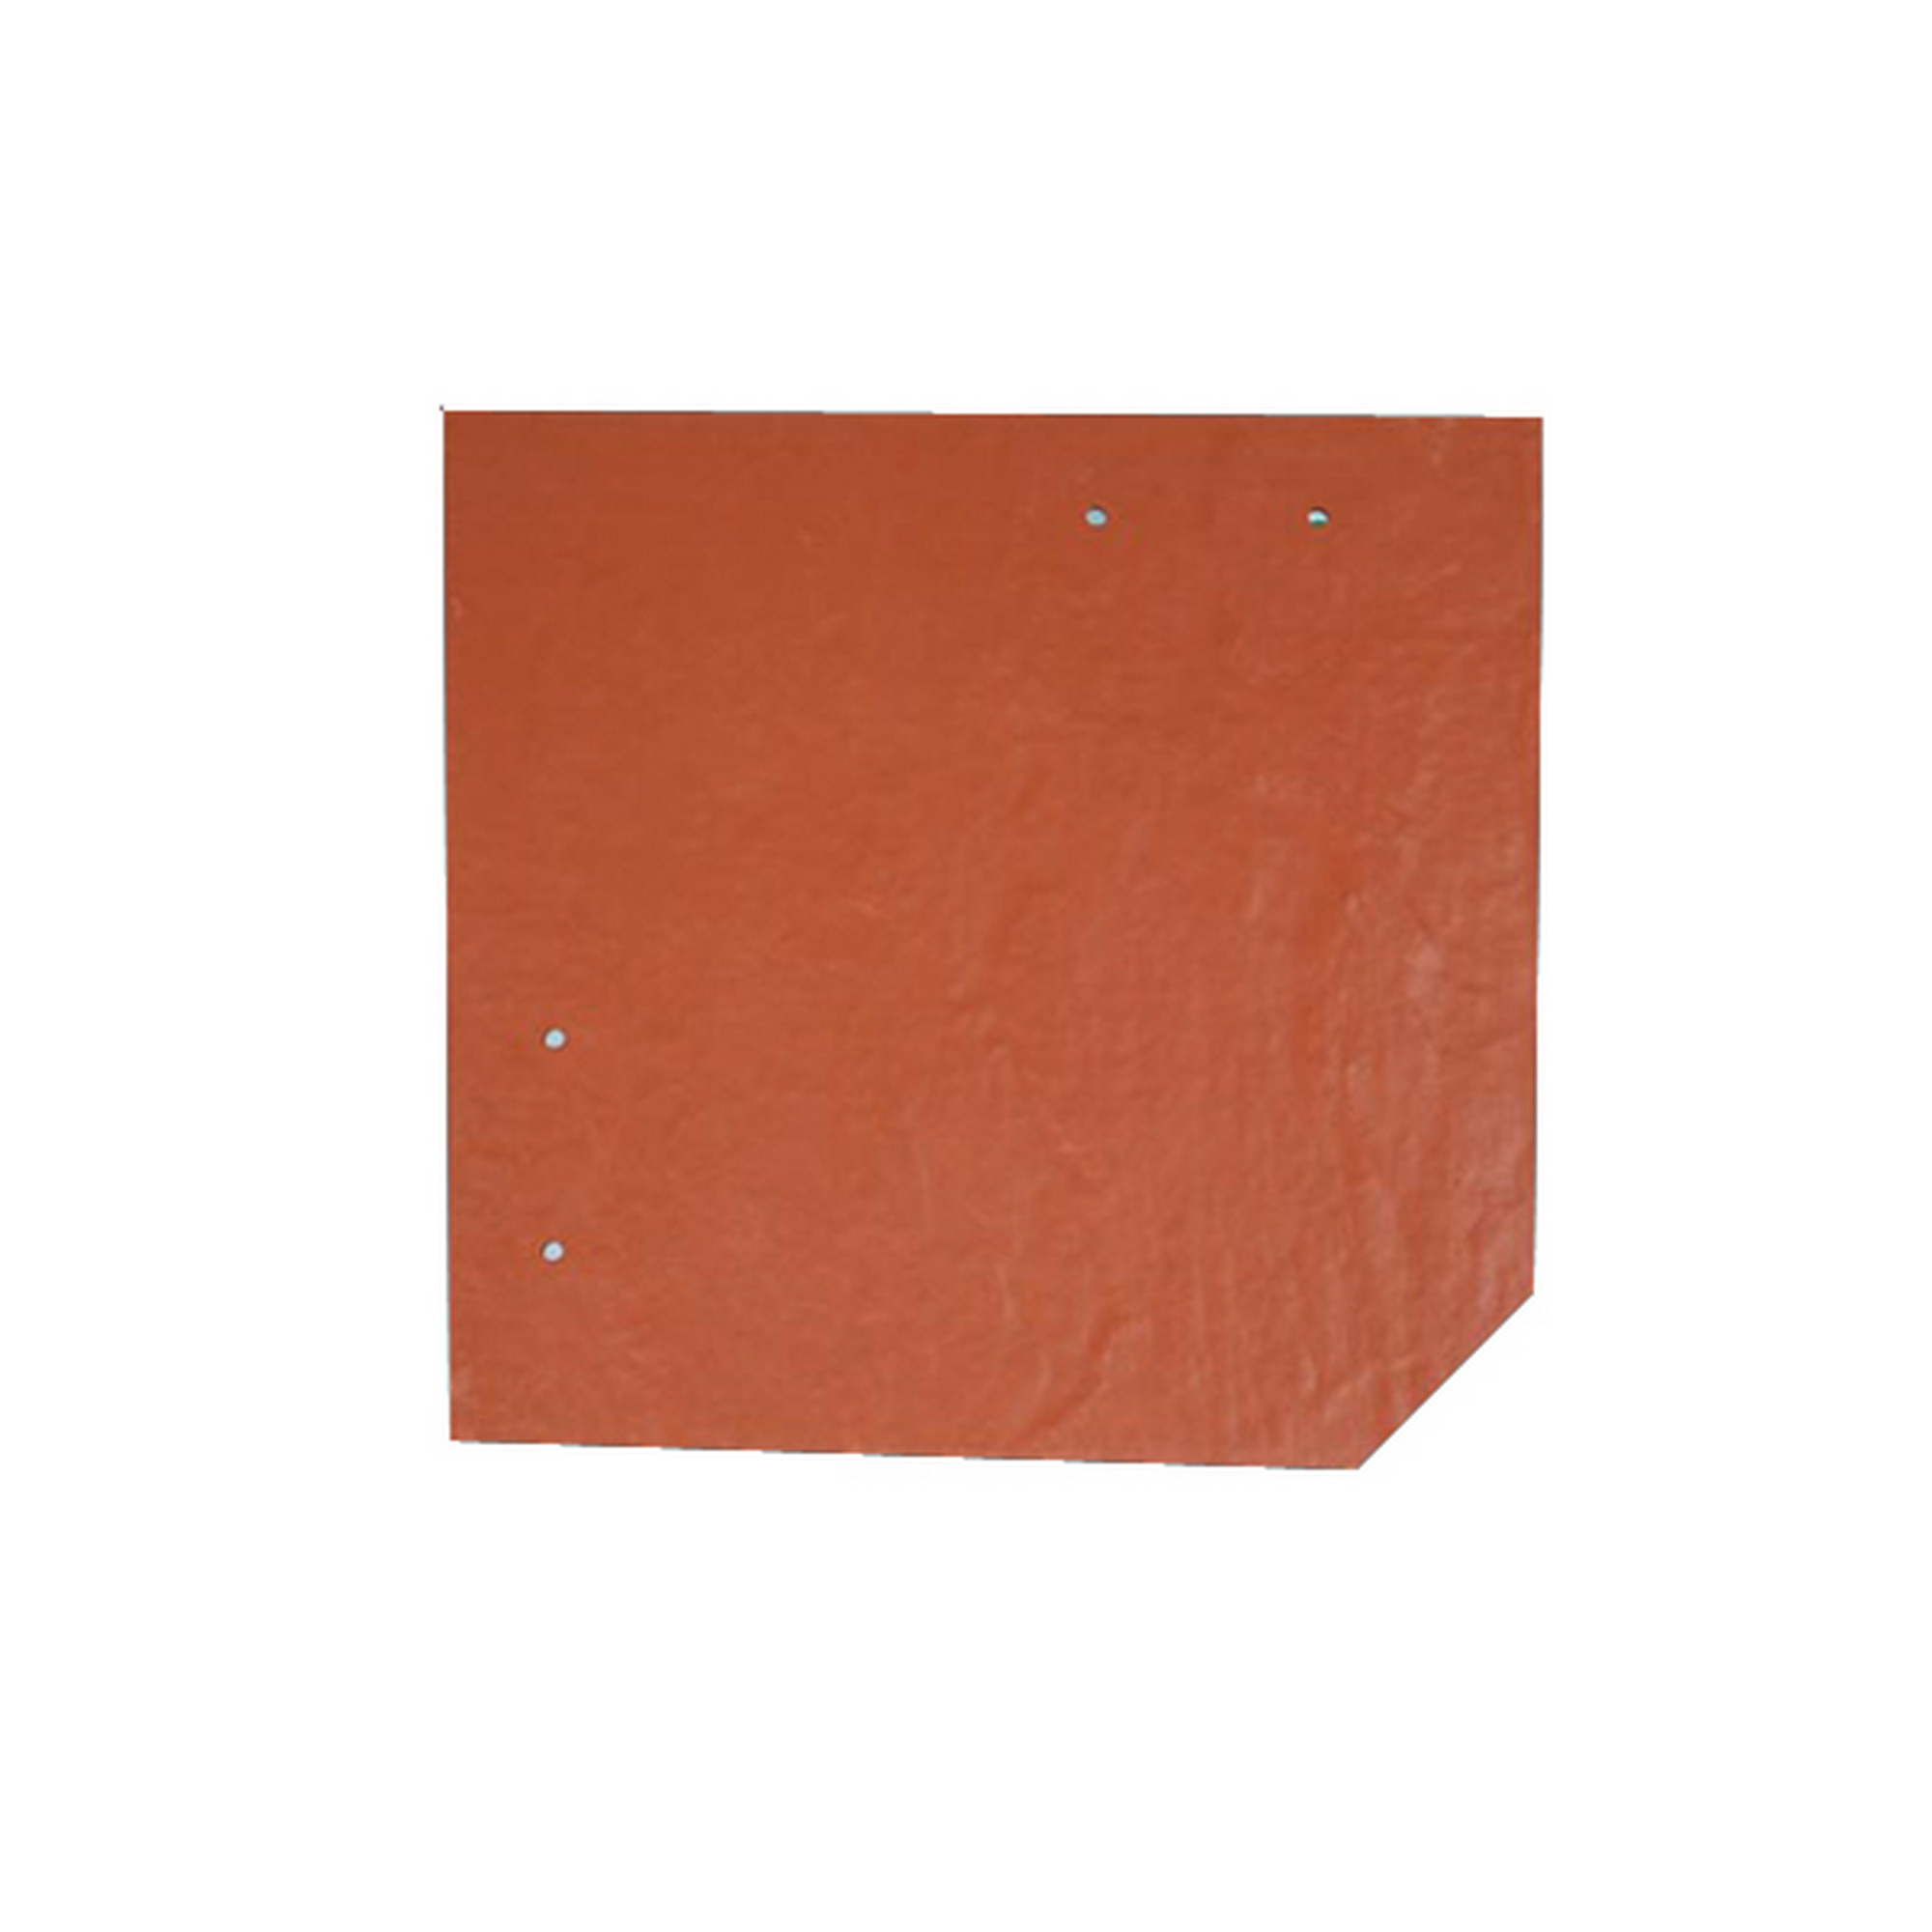 Carport 'Spreewald' rote Blende  585 x 589 cm imprägniert + product picture